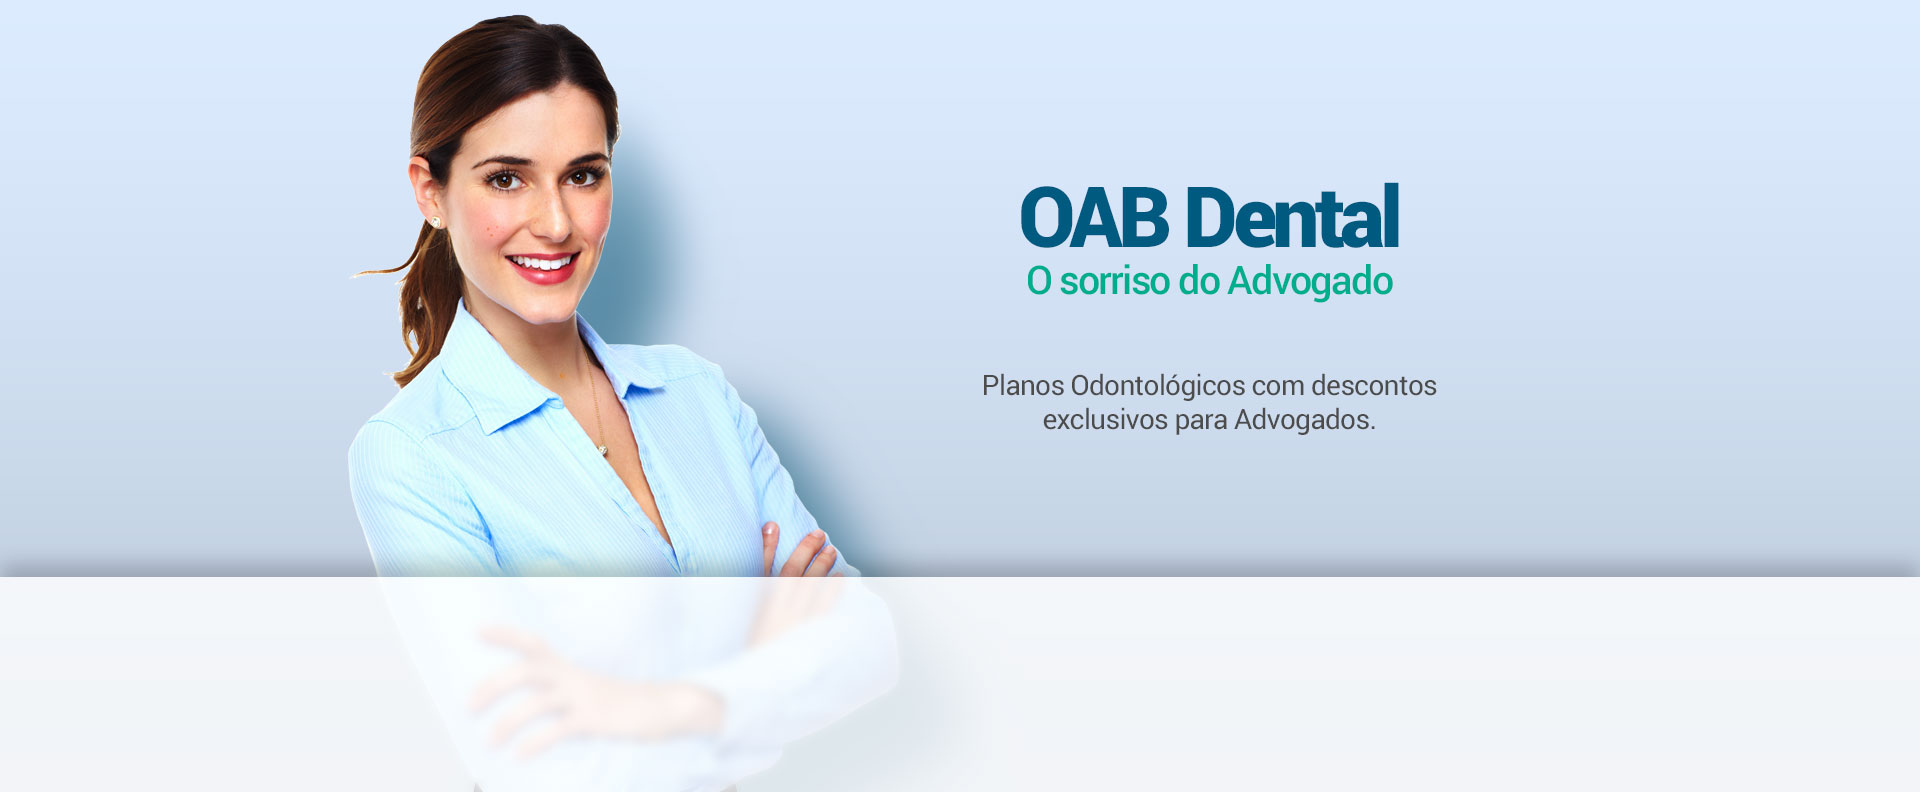 OAB Dental: O sorriso do advogado.